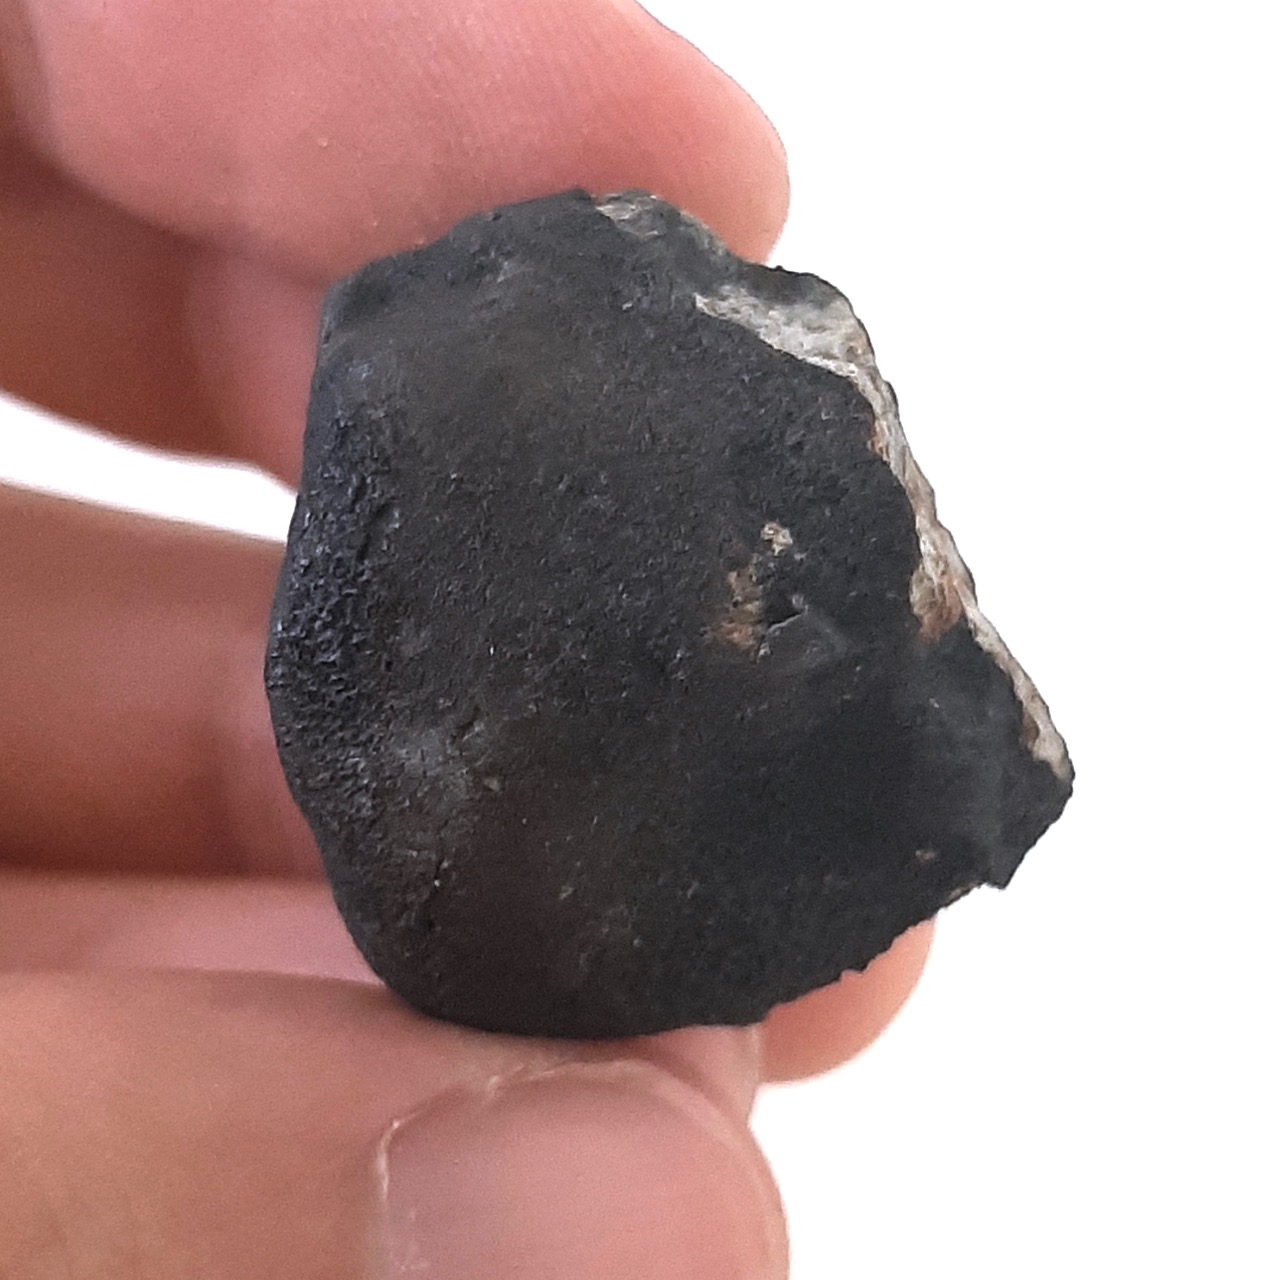 Viñales meteorite. L6 chondrite. 70% crust.